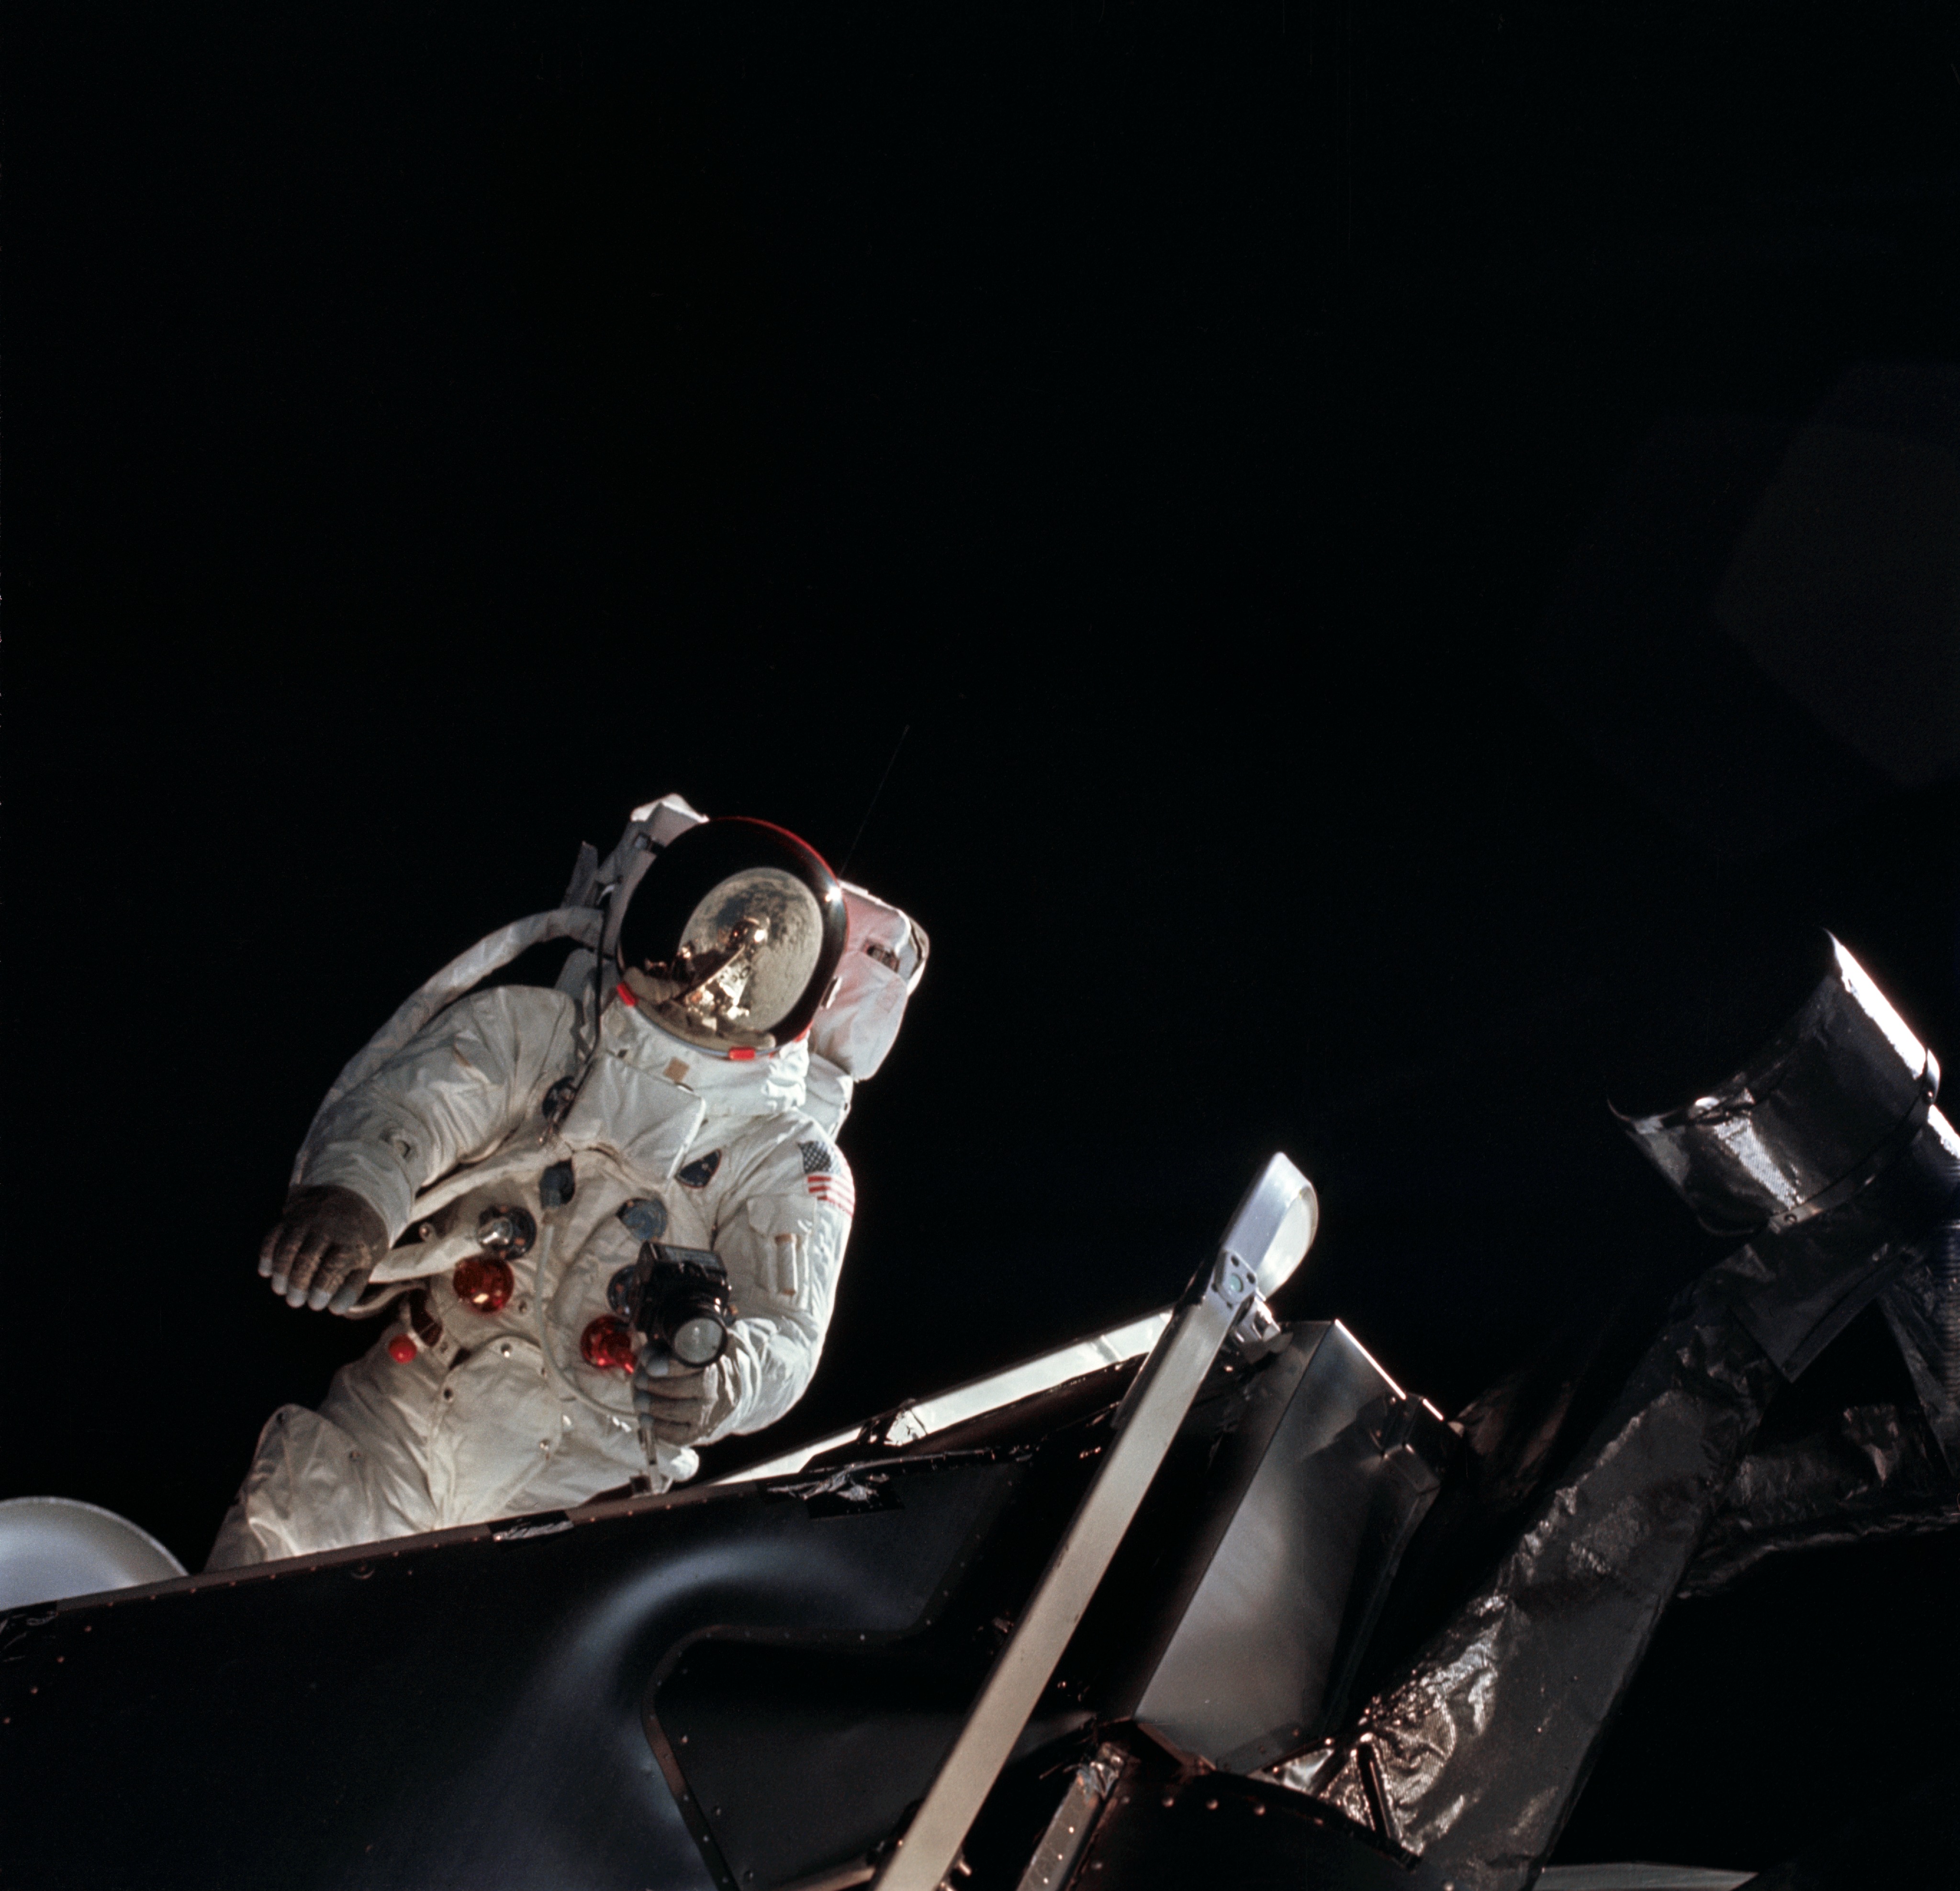 Apollo 9 Schweickart EVA with camera